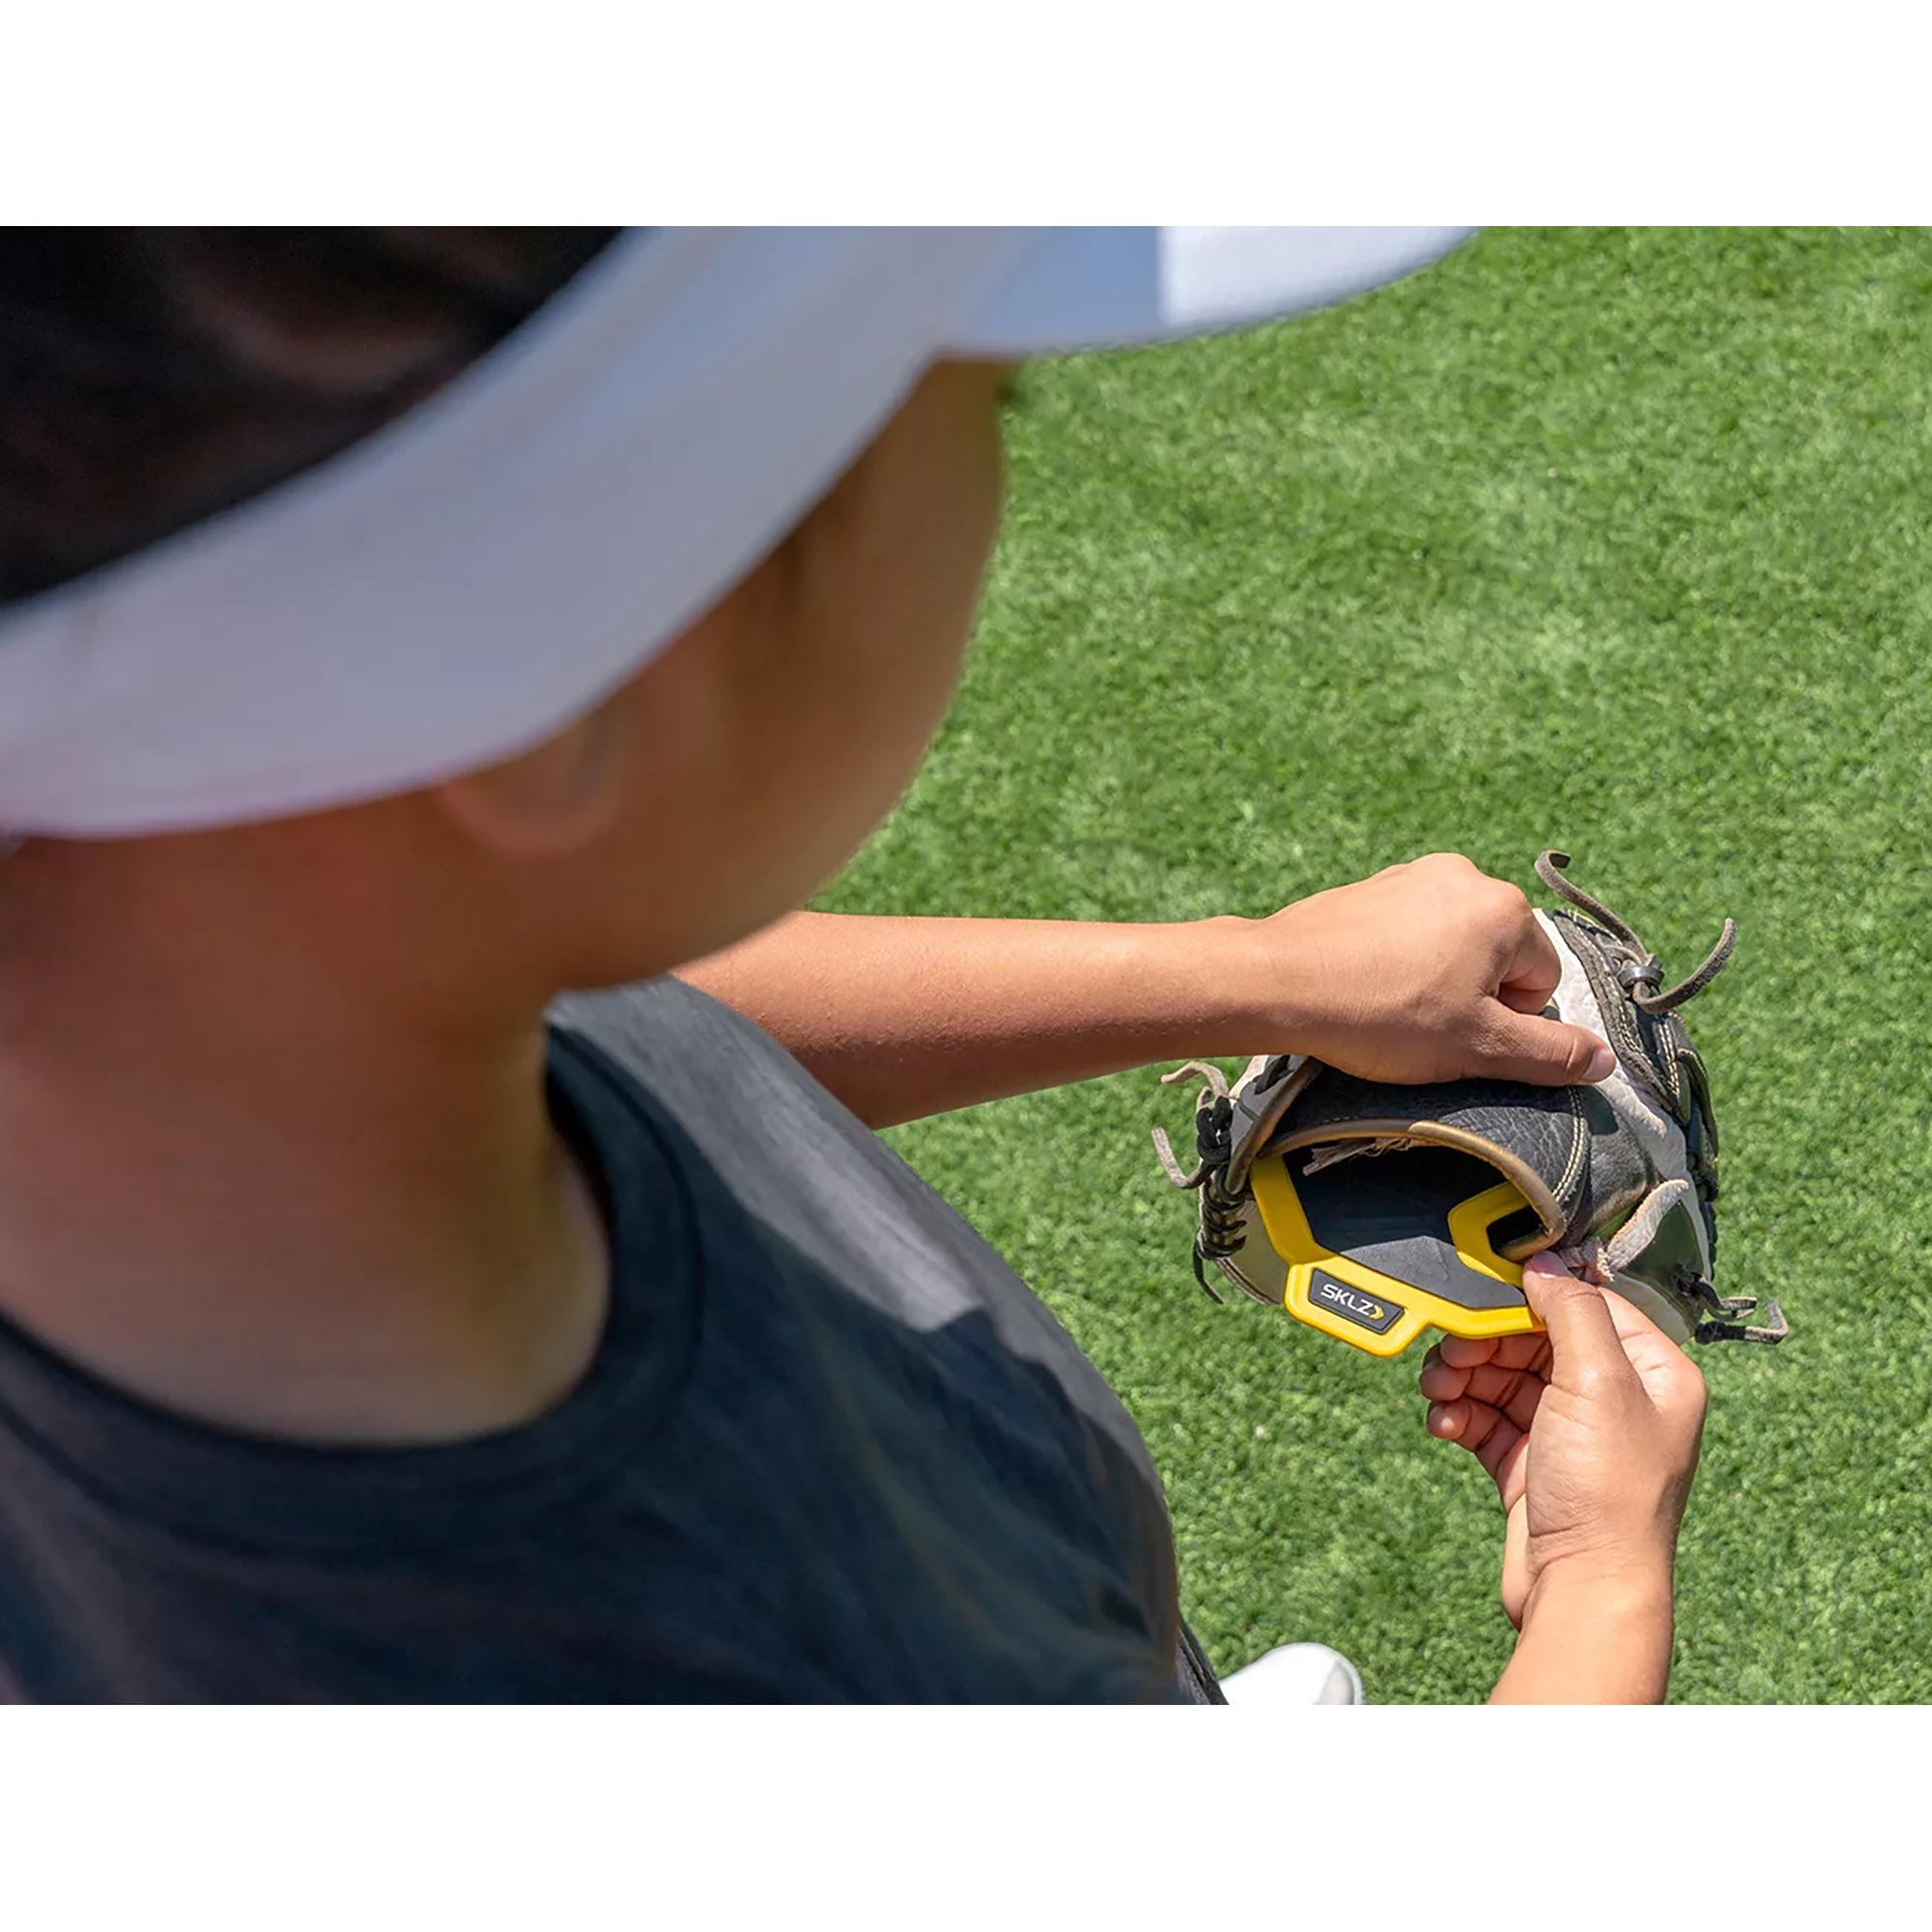 SKLZ Adult Fielding Hands Baseball/Softball Training Aid - Black/Yellow SKLZ